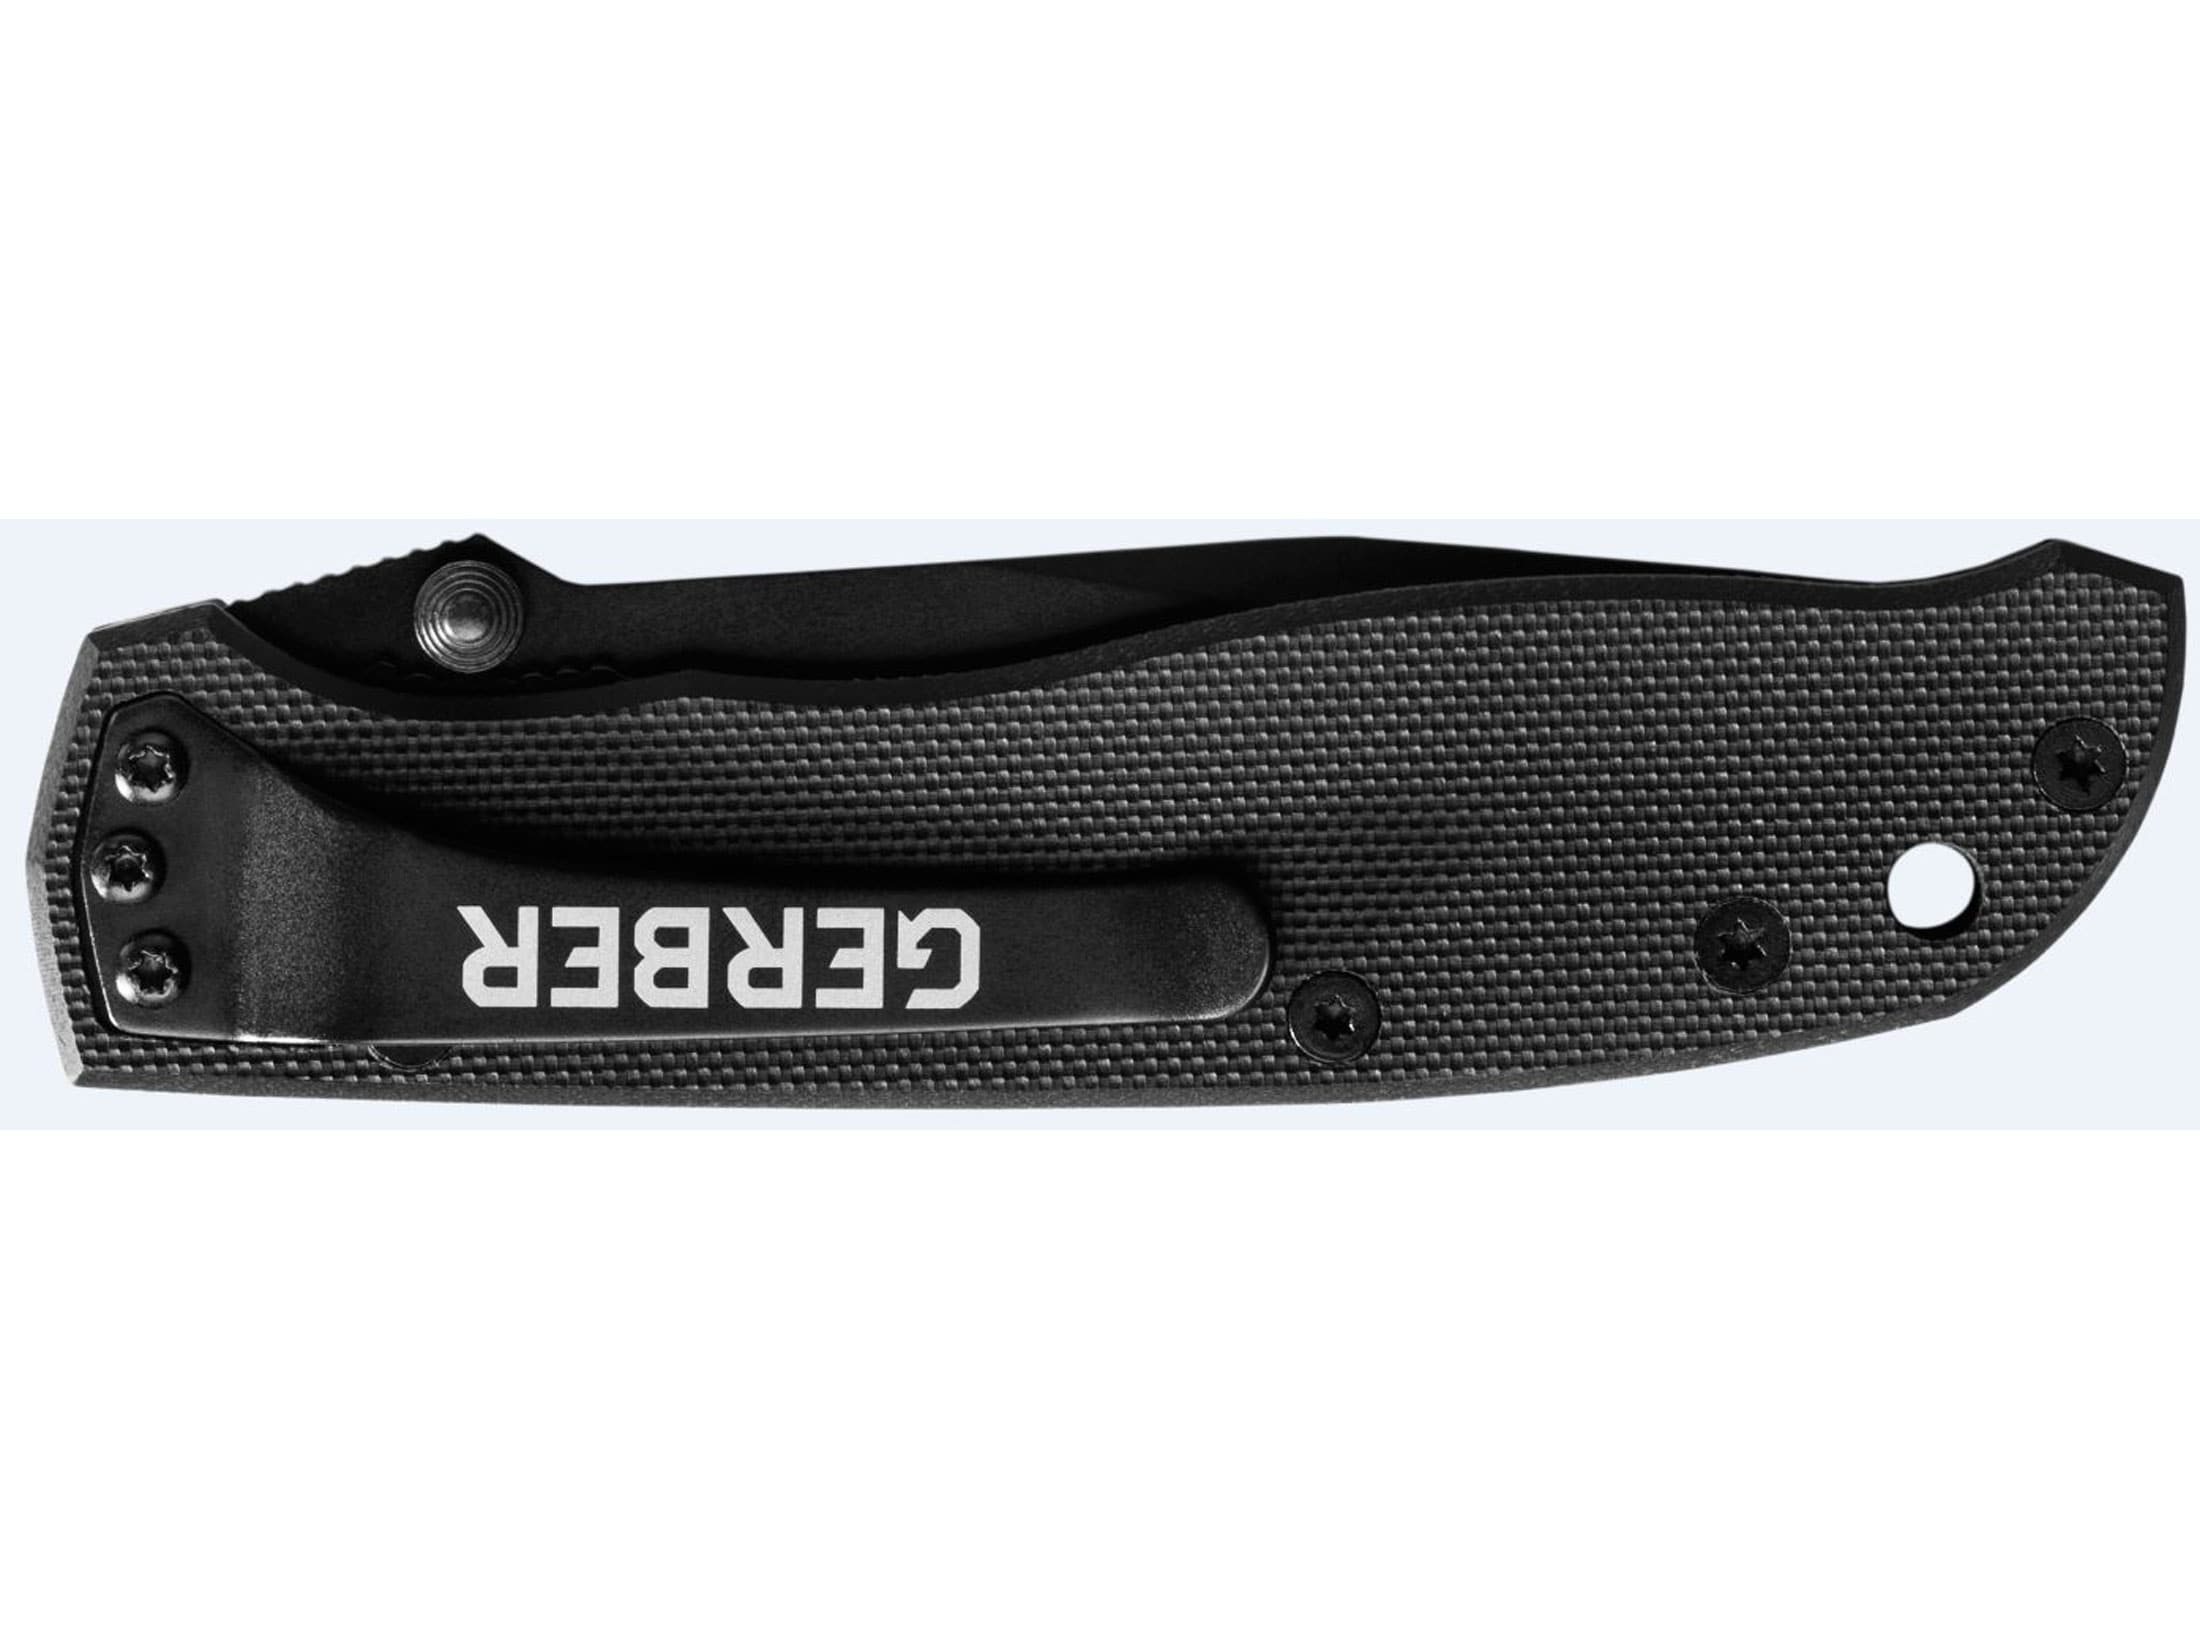 Gerber Air Ranger Folding Pocket Knife 3.2″ Clip Point Stainless Steel Blade G-10 Handle Black For Sale